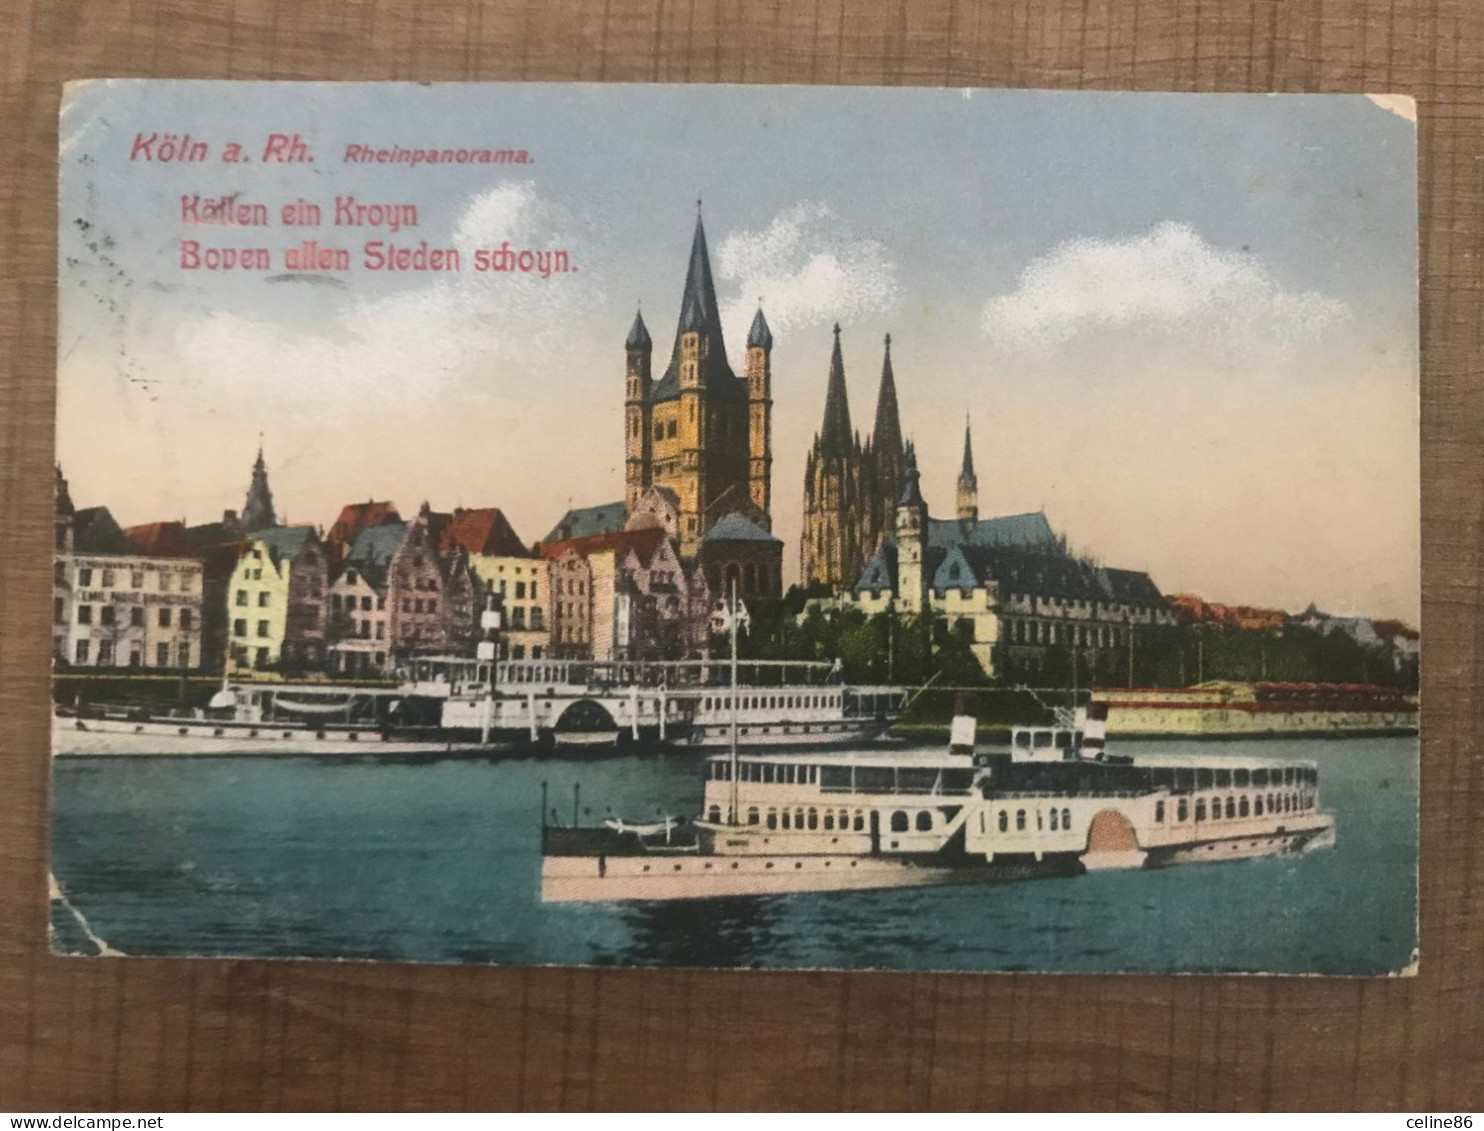  Köln A. Rh. Rheinpanorama Köllen Ein Kroyn  - Köln